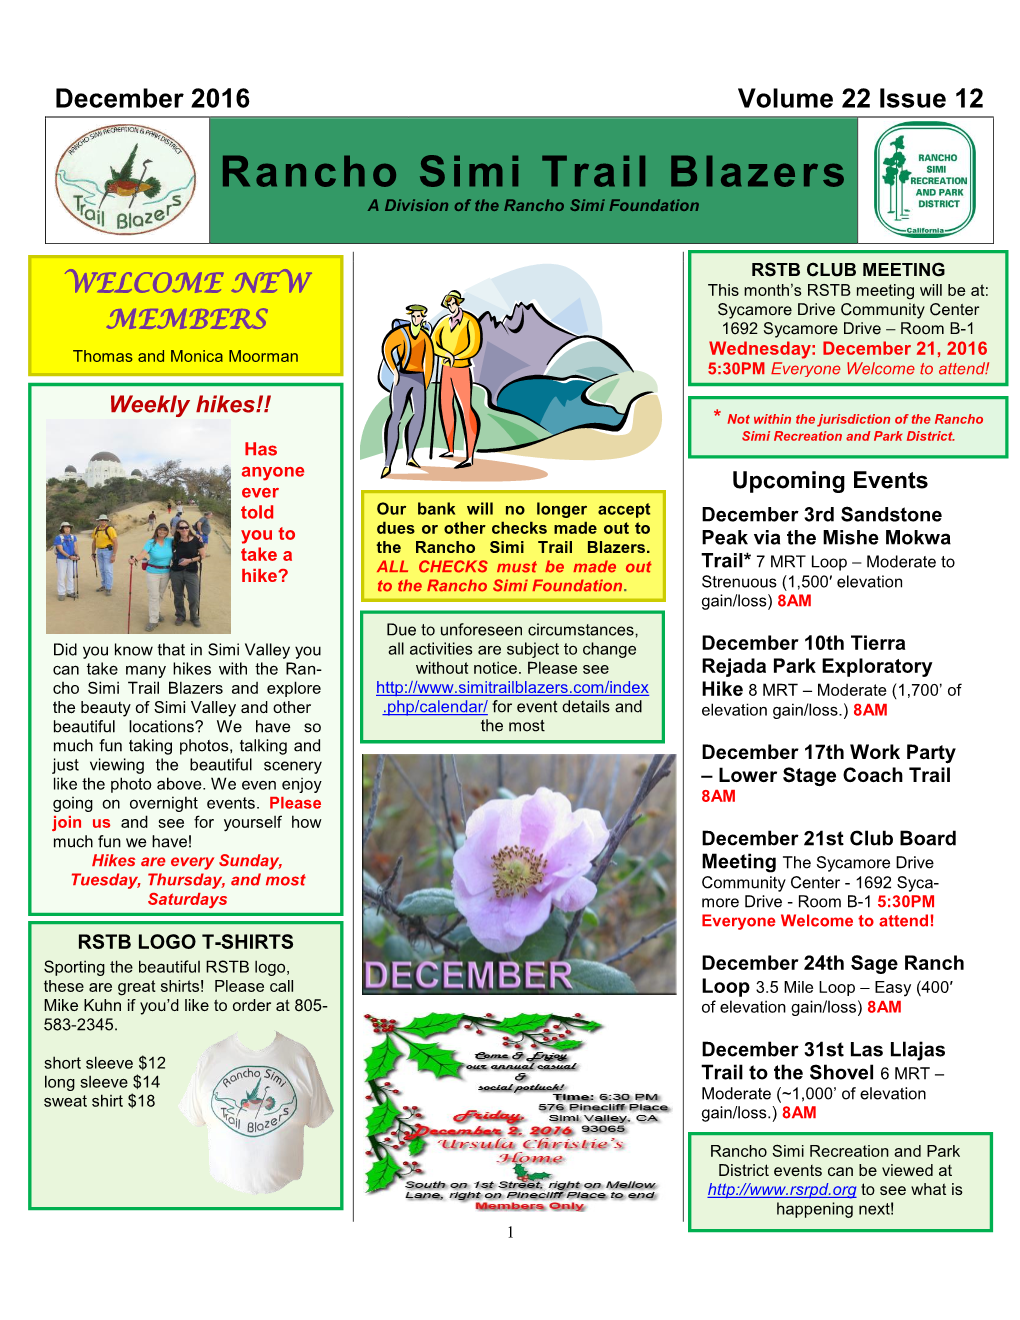 Rancho Simi Trail Blazers a Division of the Rancho Simi Foundation